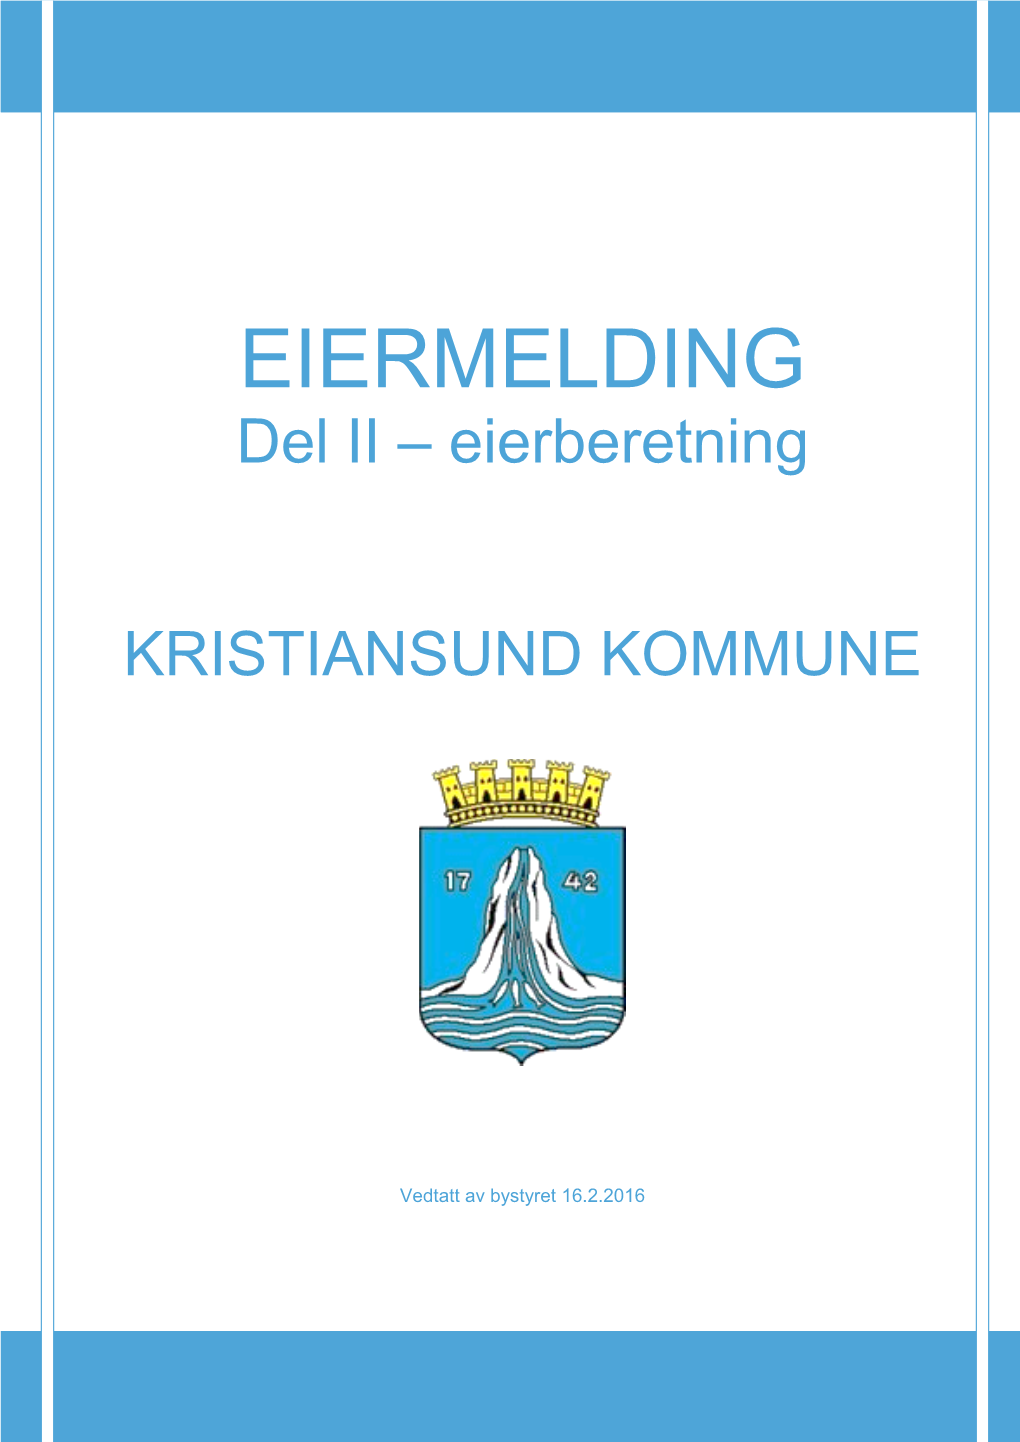 EIERMELDING Del II – Eierberetning